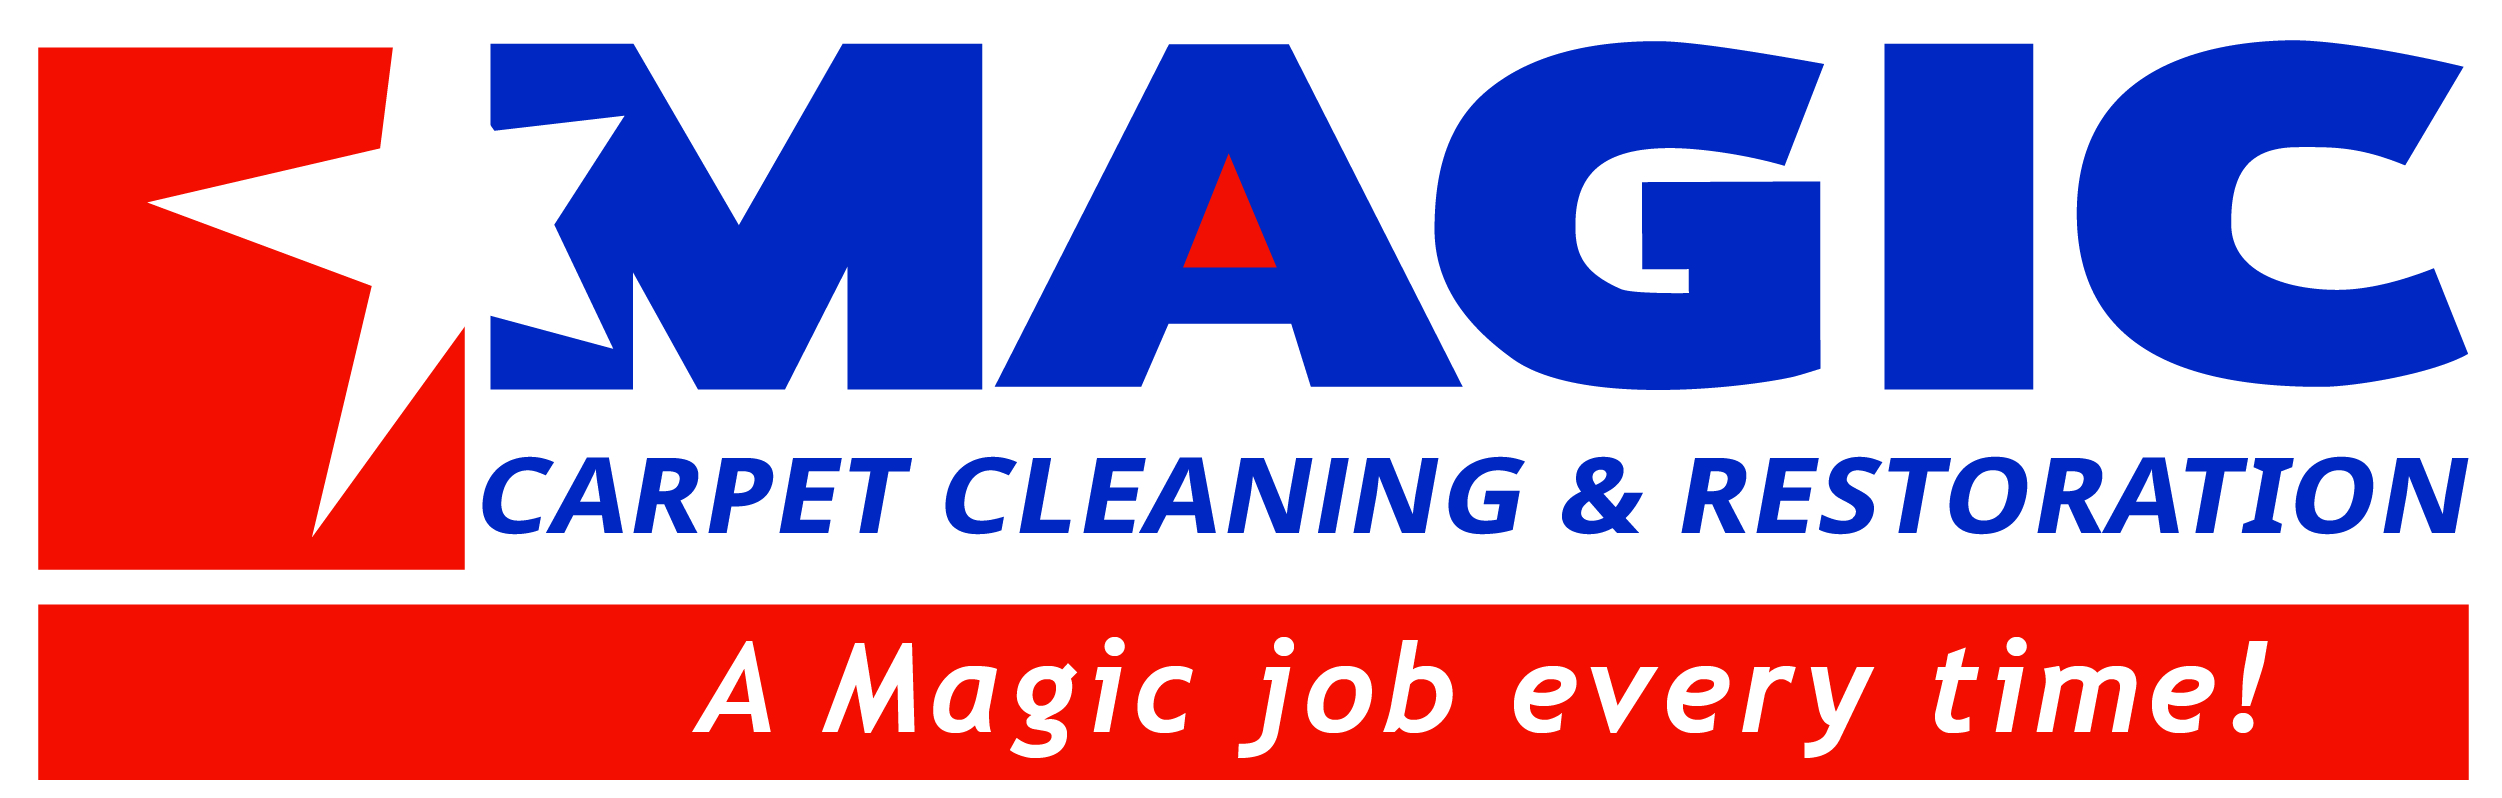 Magic Carpet Cleaning and Restoration logo FINAL-01 (002).jpg